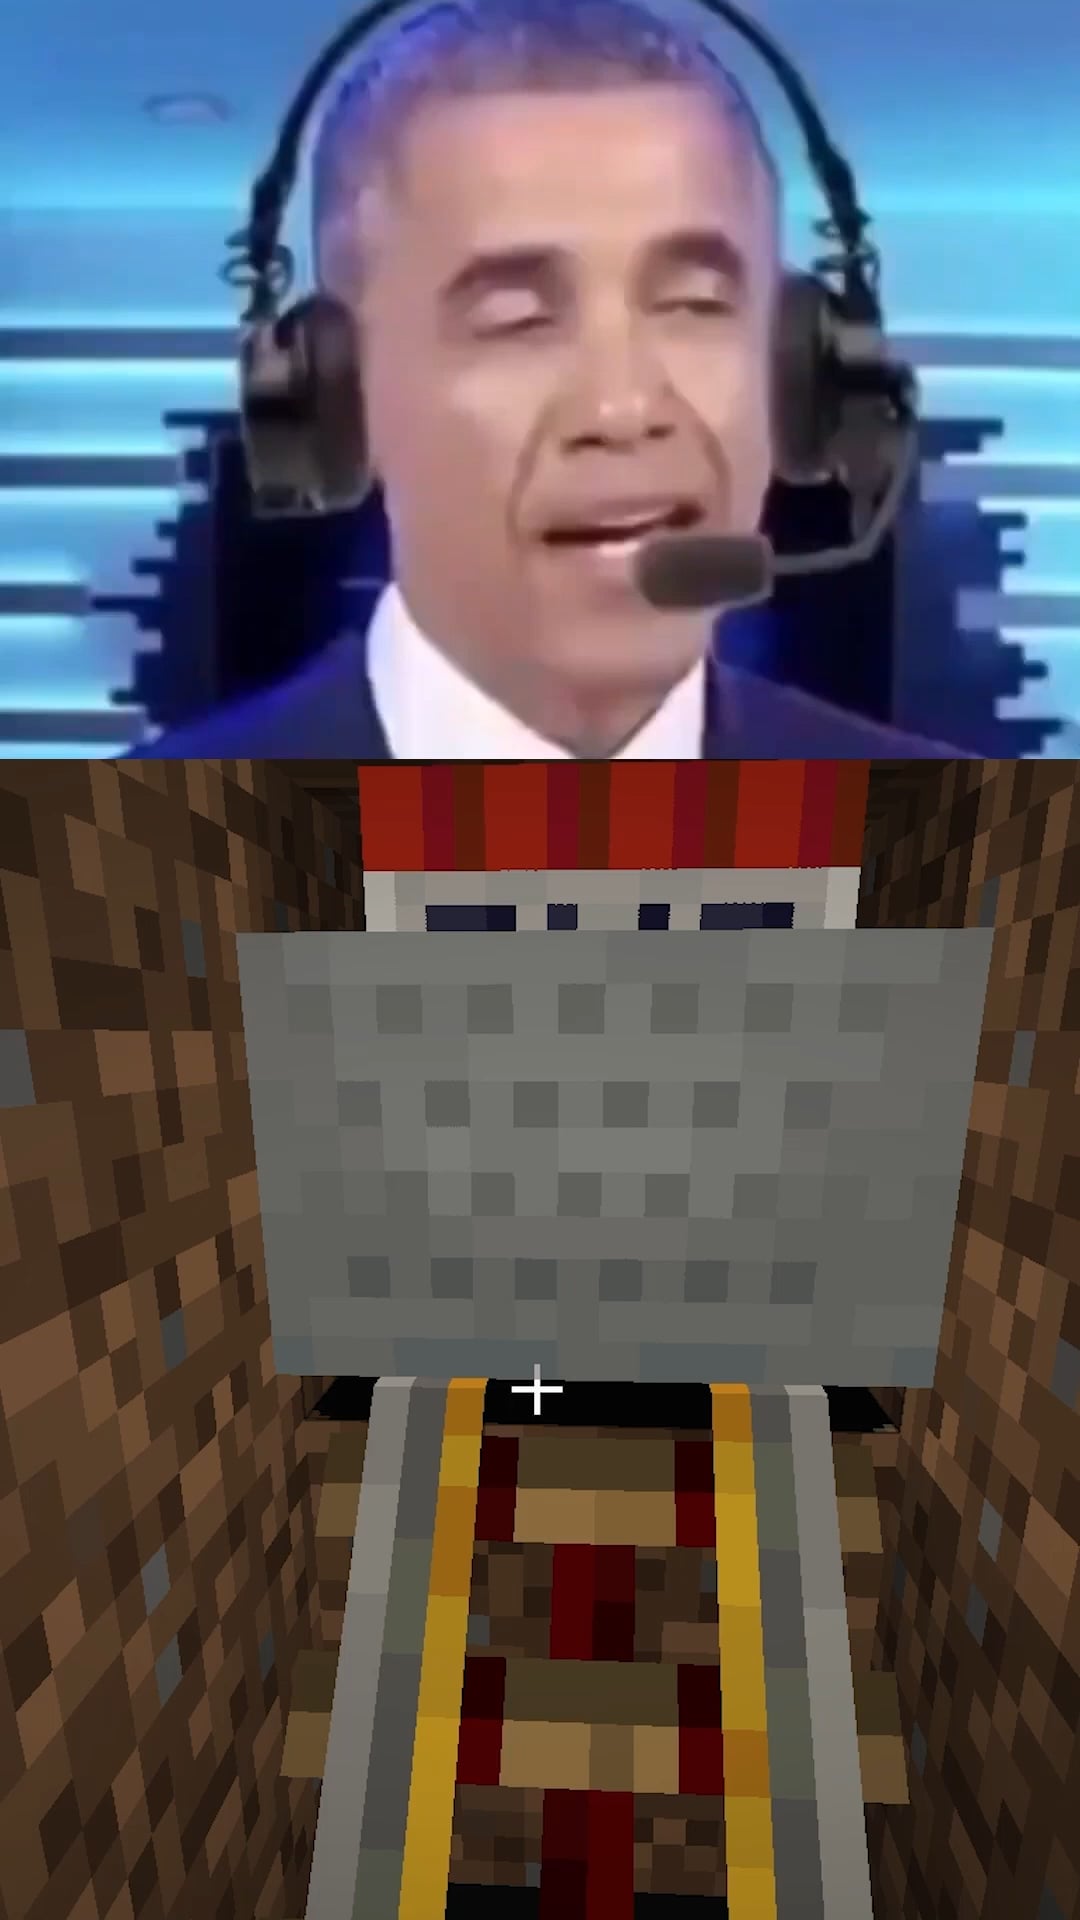 Minecraft Memes - Obama & Biden troll Trump